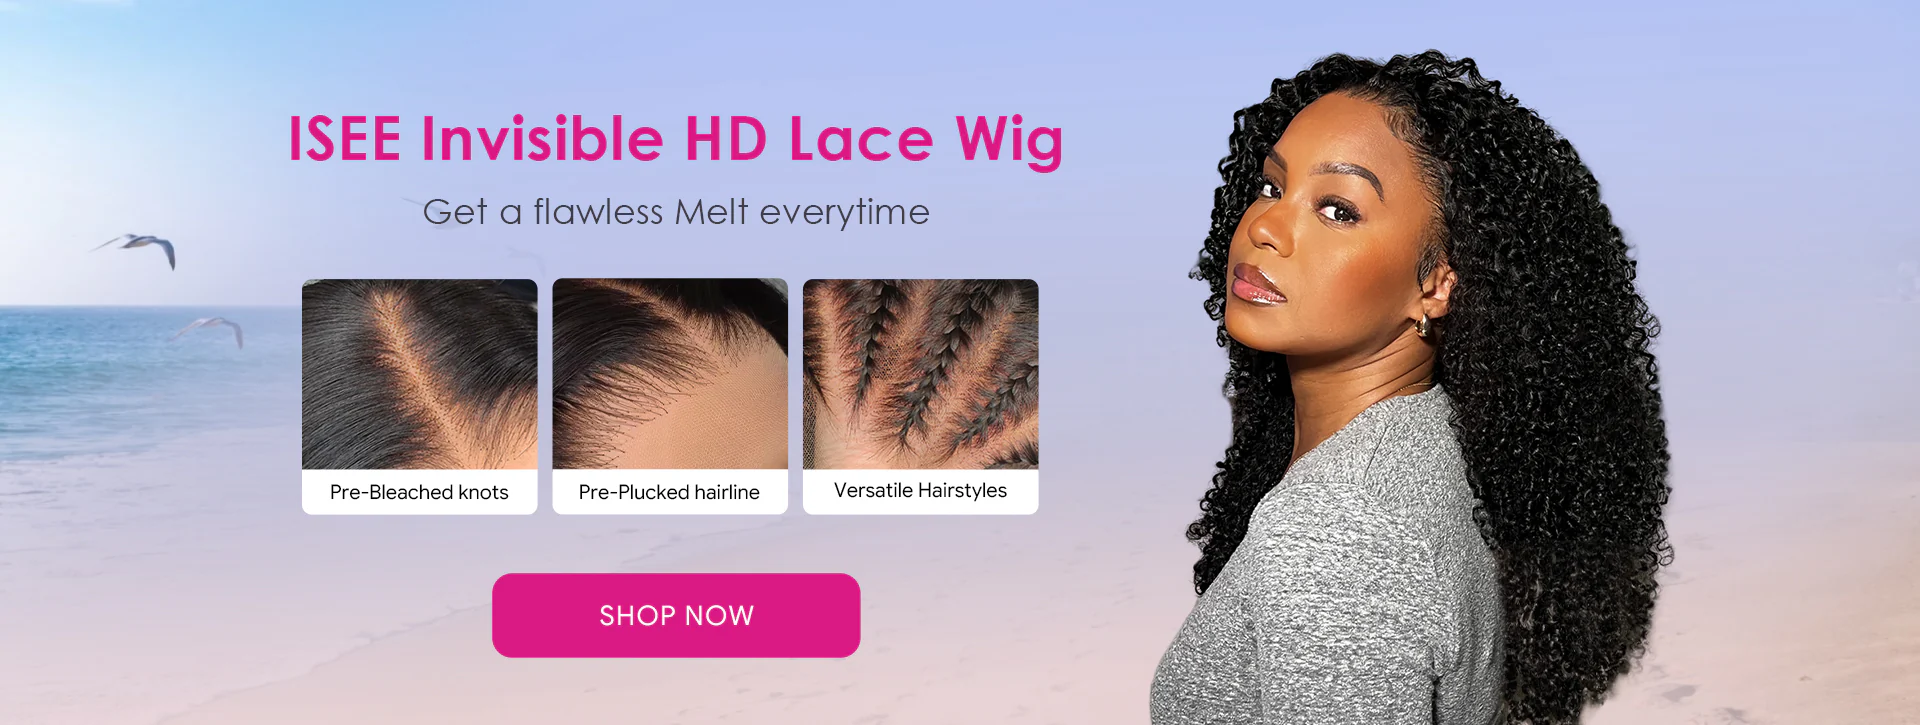 ISEE Travel Season Sale HD Lace Wig